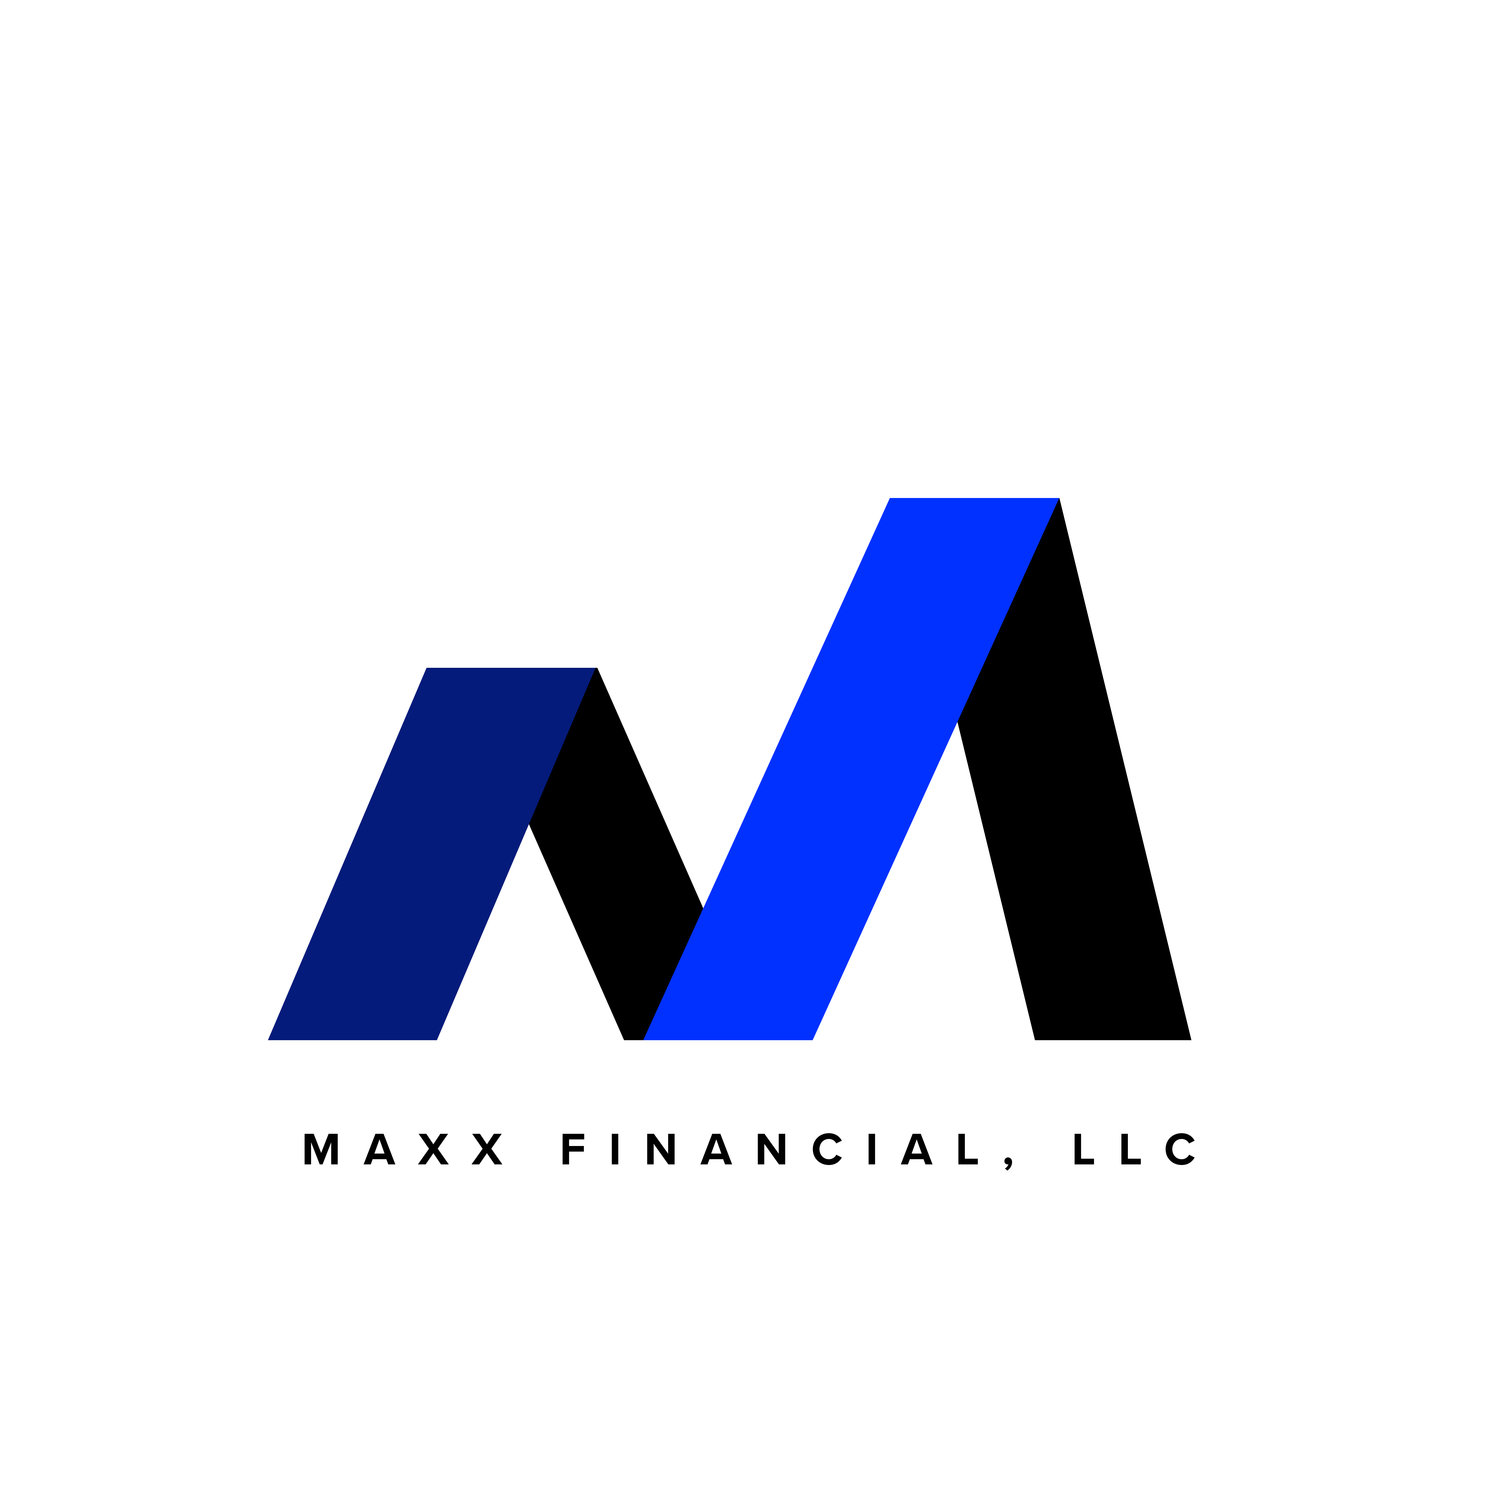 Maxx Financial, LLC